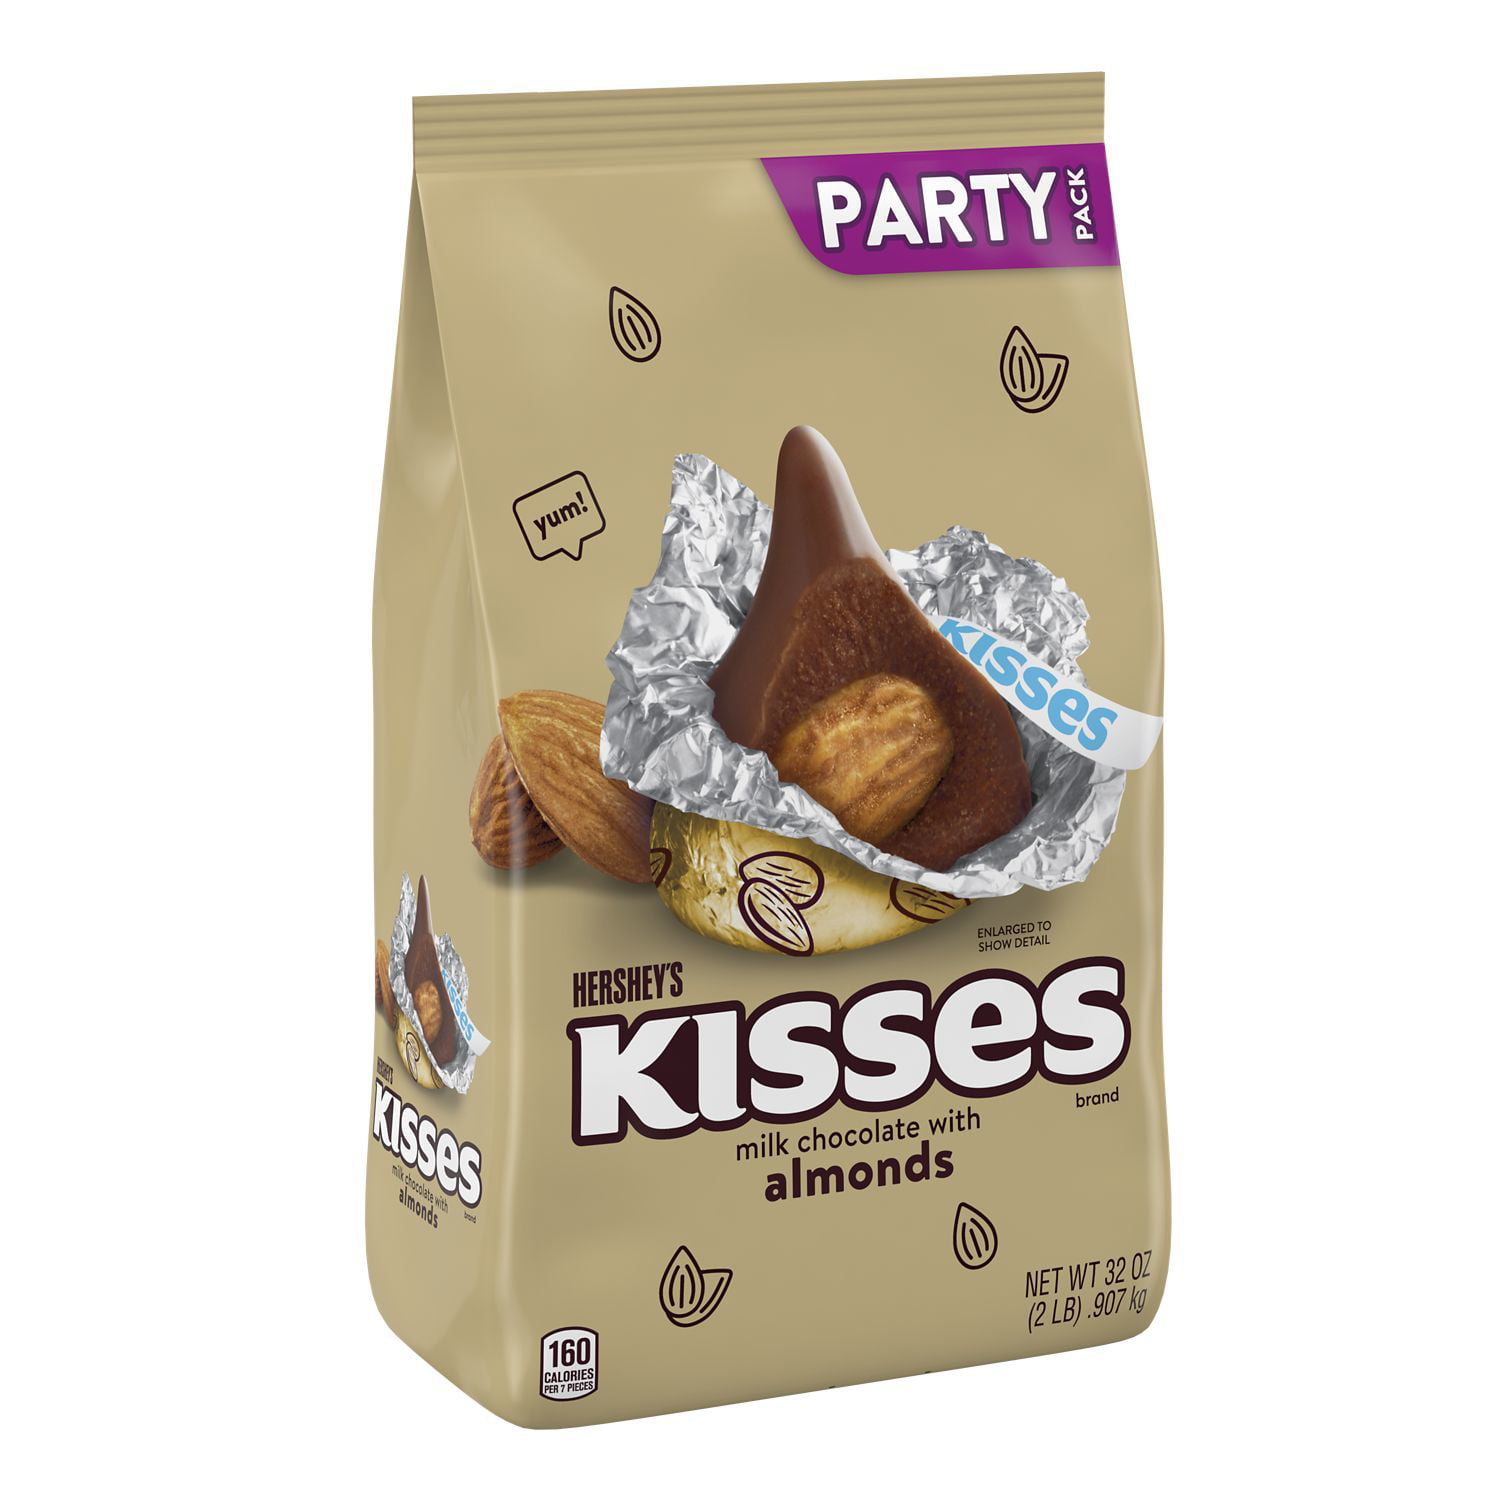 New Handmade Fake Chocolate Kisses Drops Decorative Food Photo Props Display 